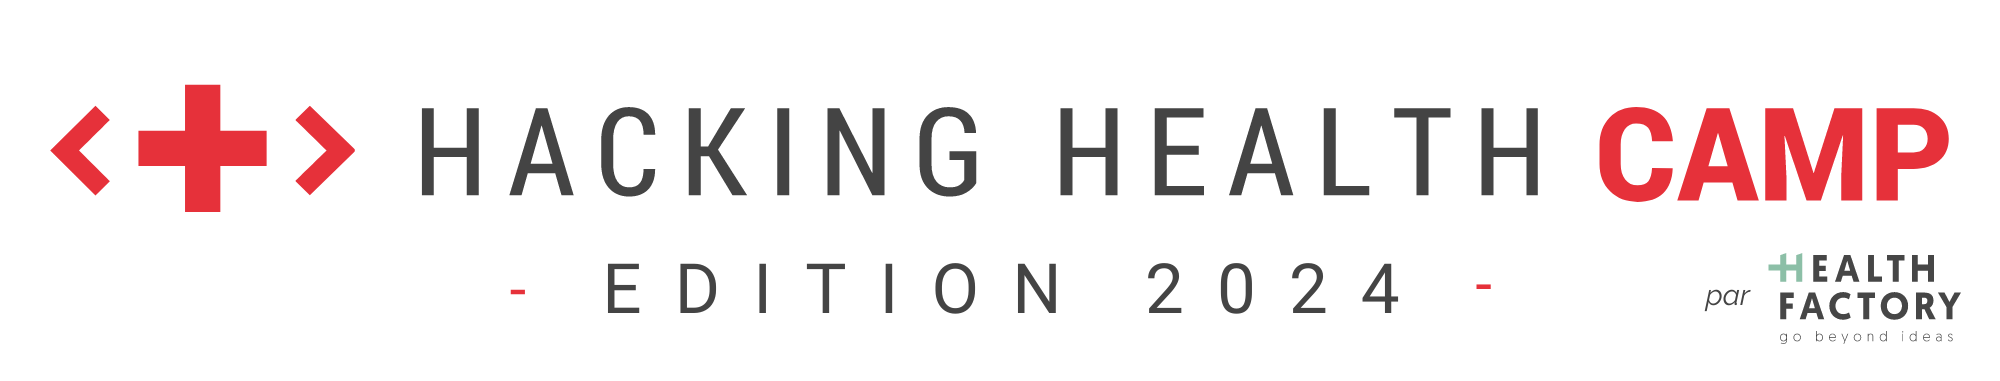 hhc-2024-logo-rouge-lettrage-gris-byHF